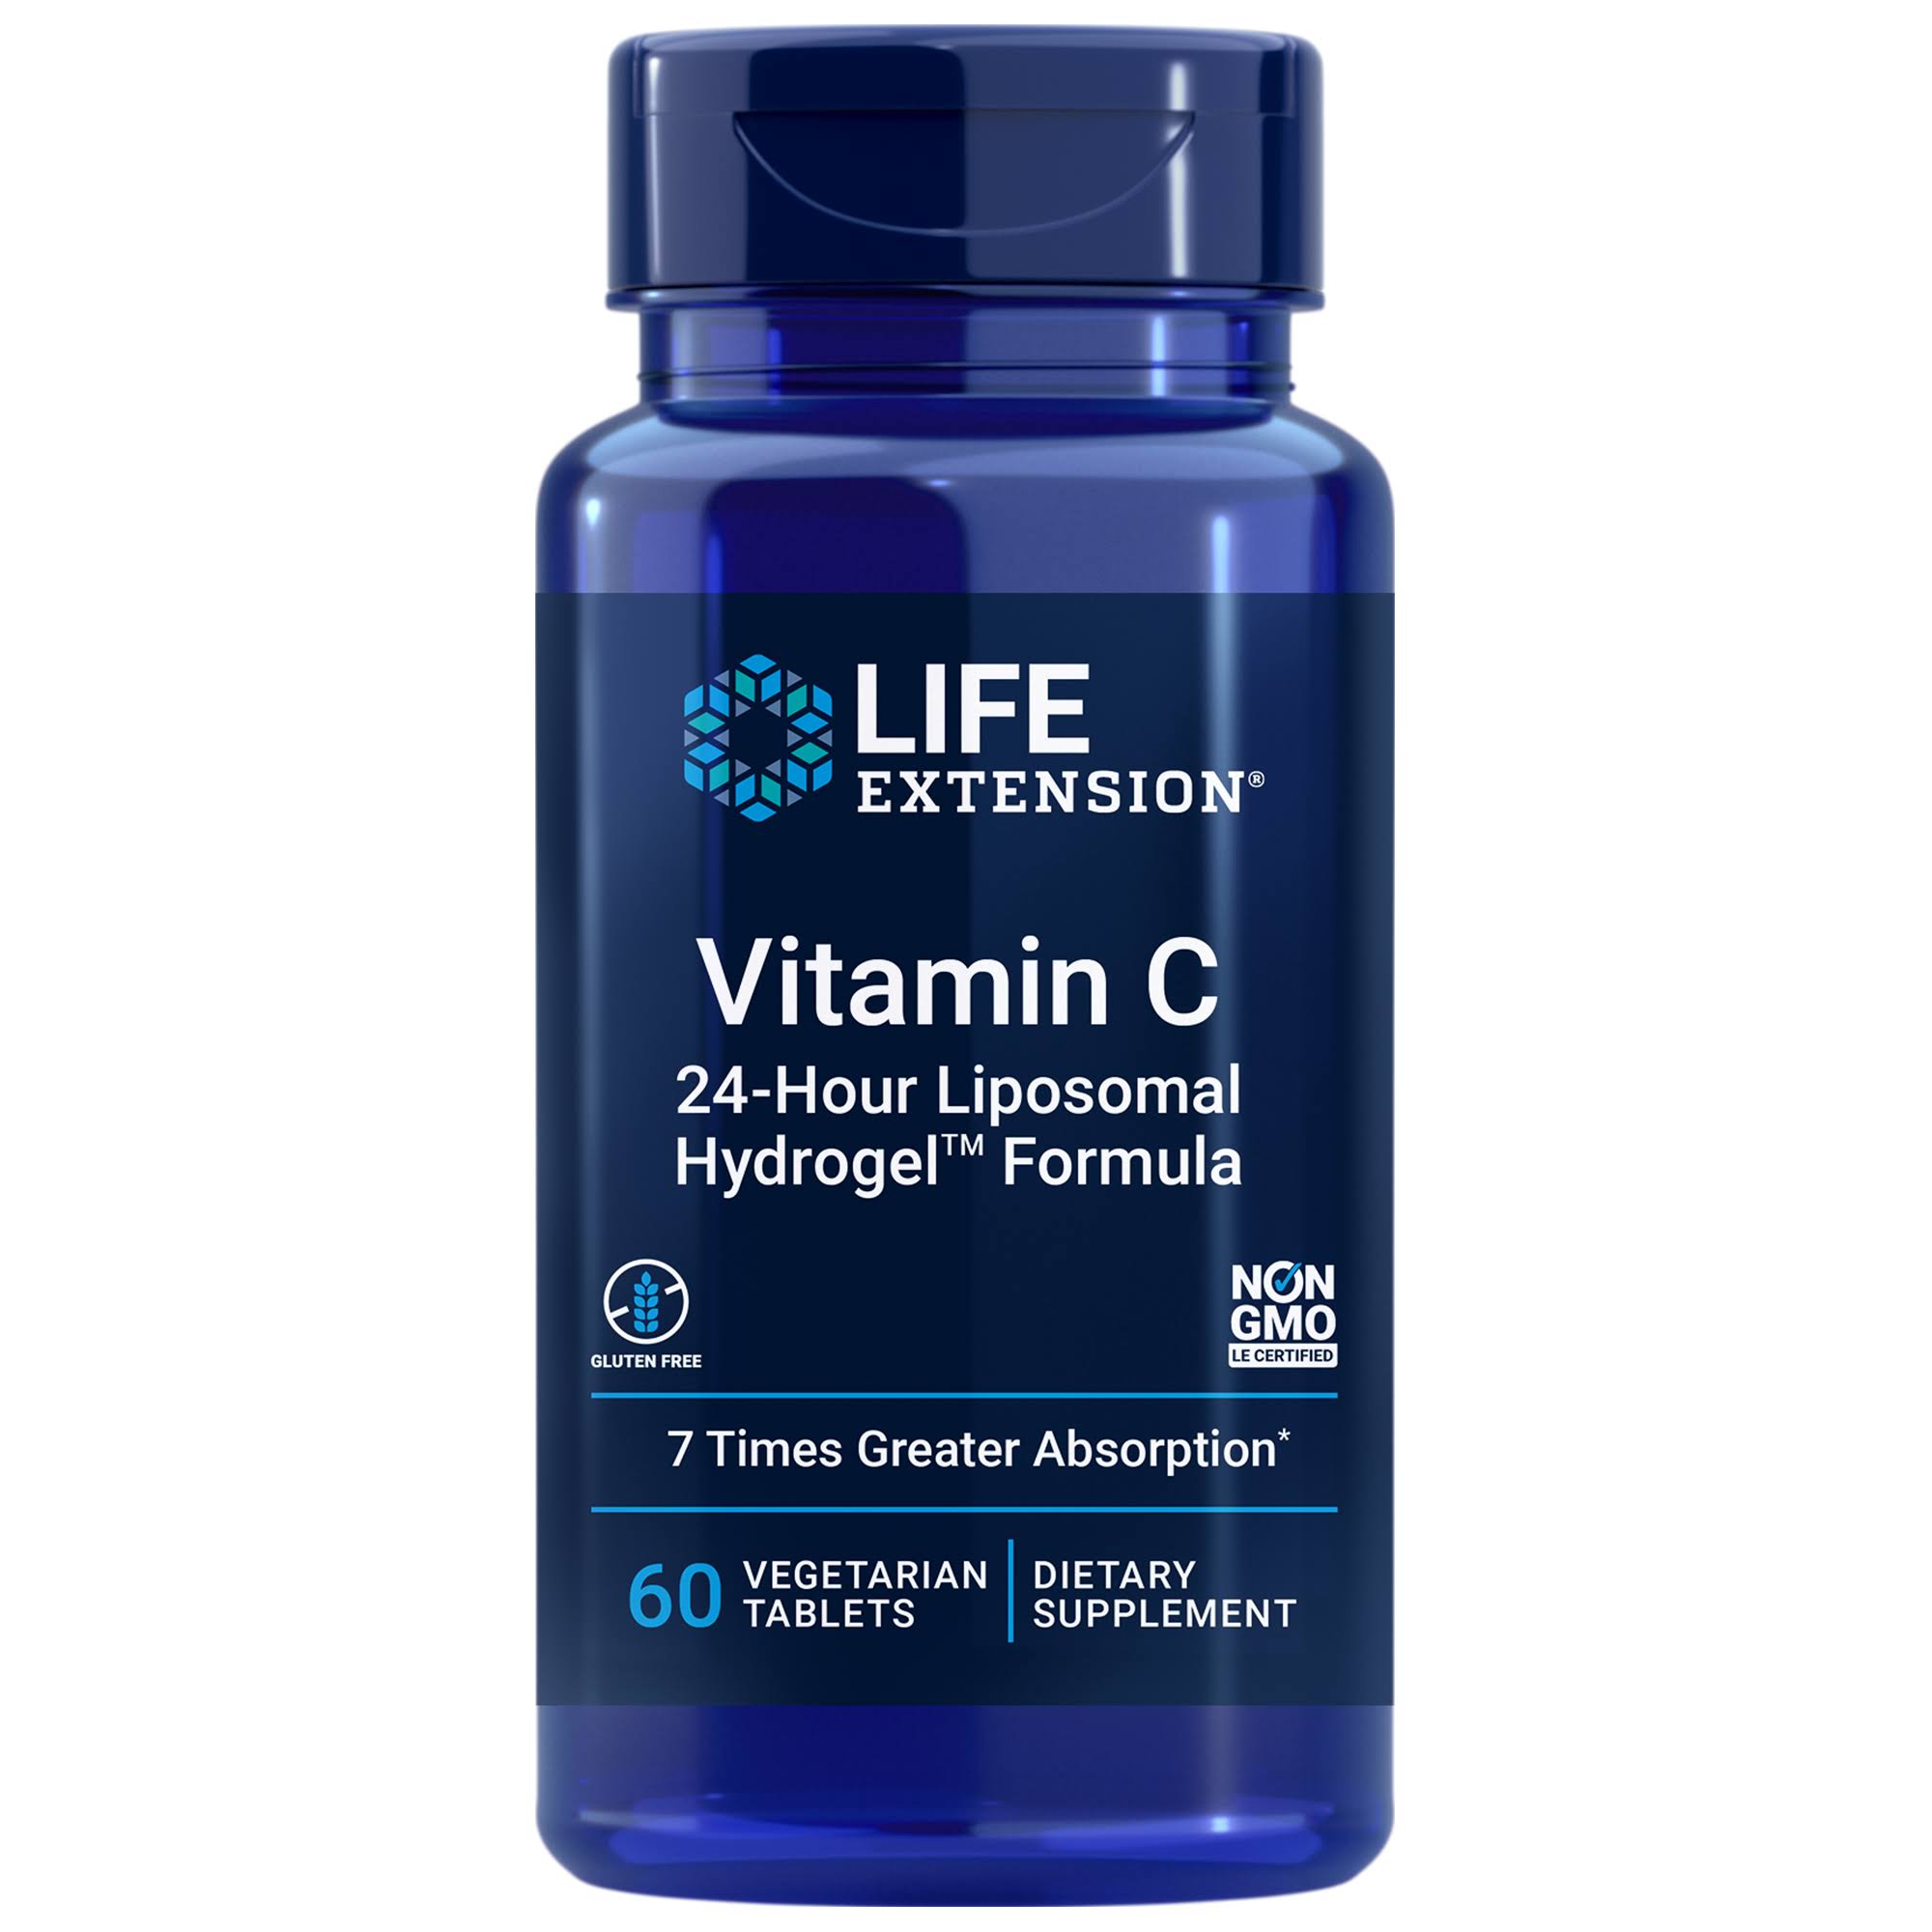 Life Extension Vitamin C 24 Hour Liposomal Hydrogel Formula - 60 Vegetarian Tablets